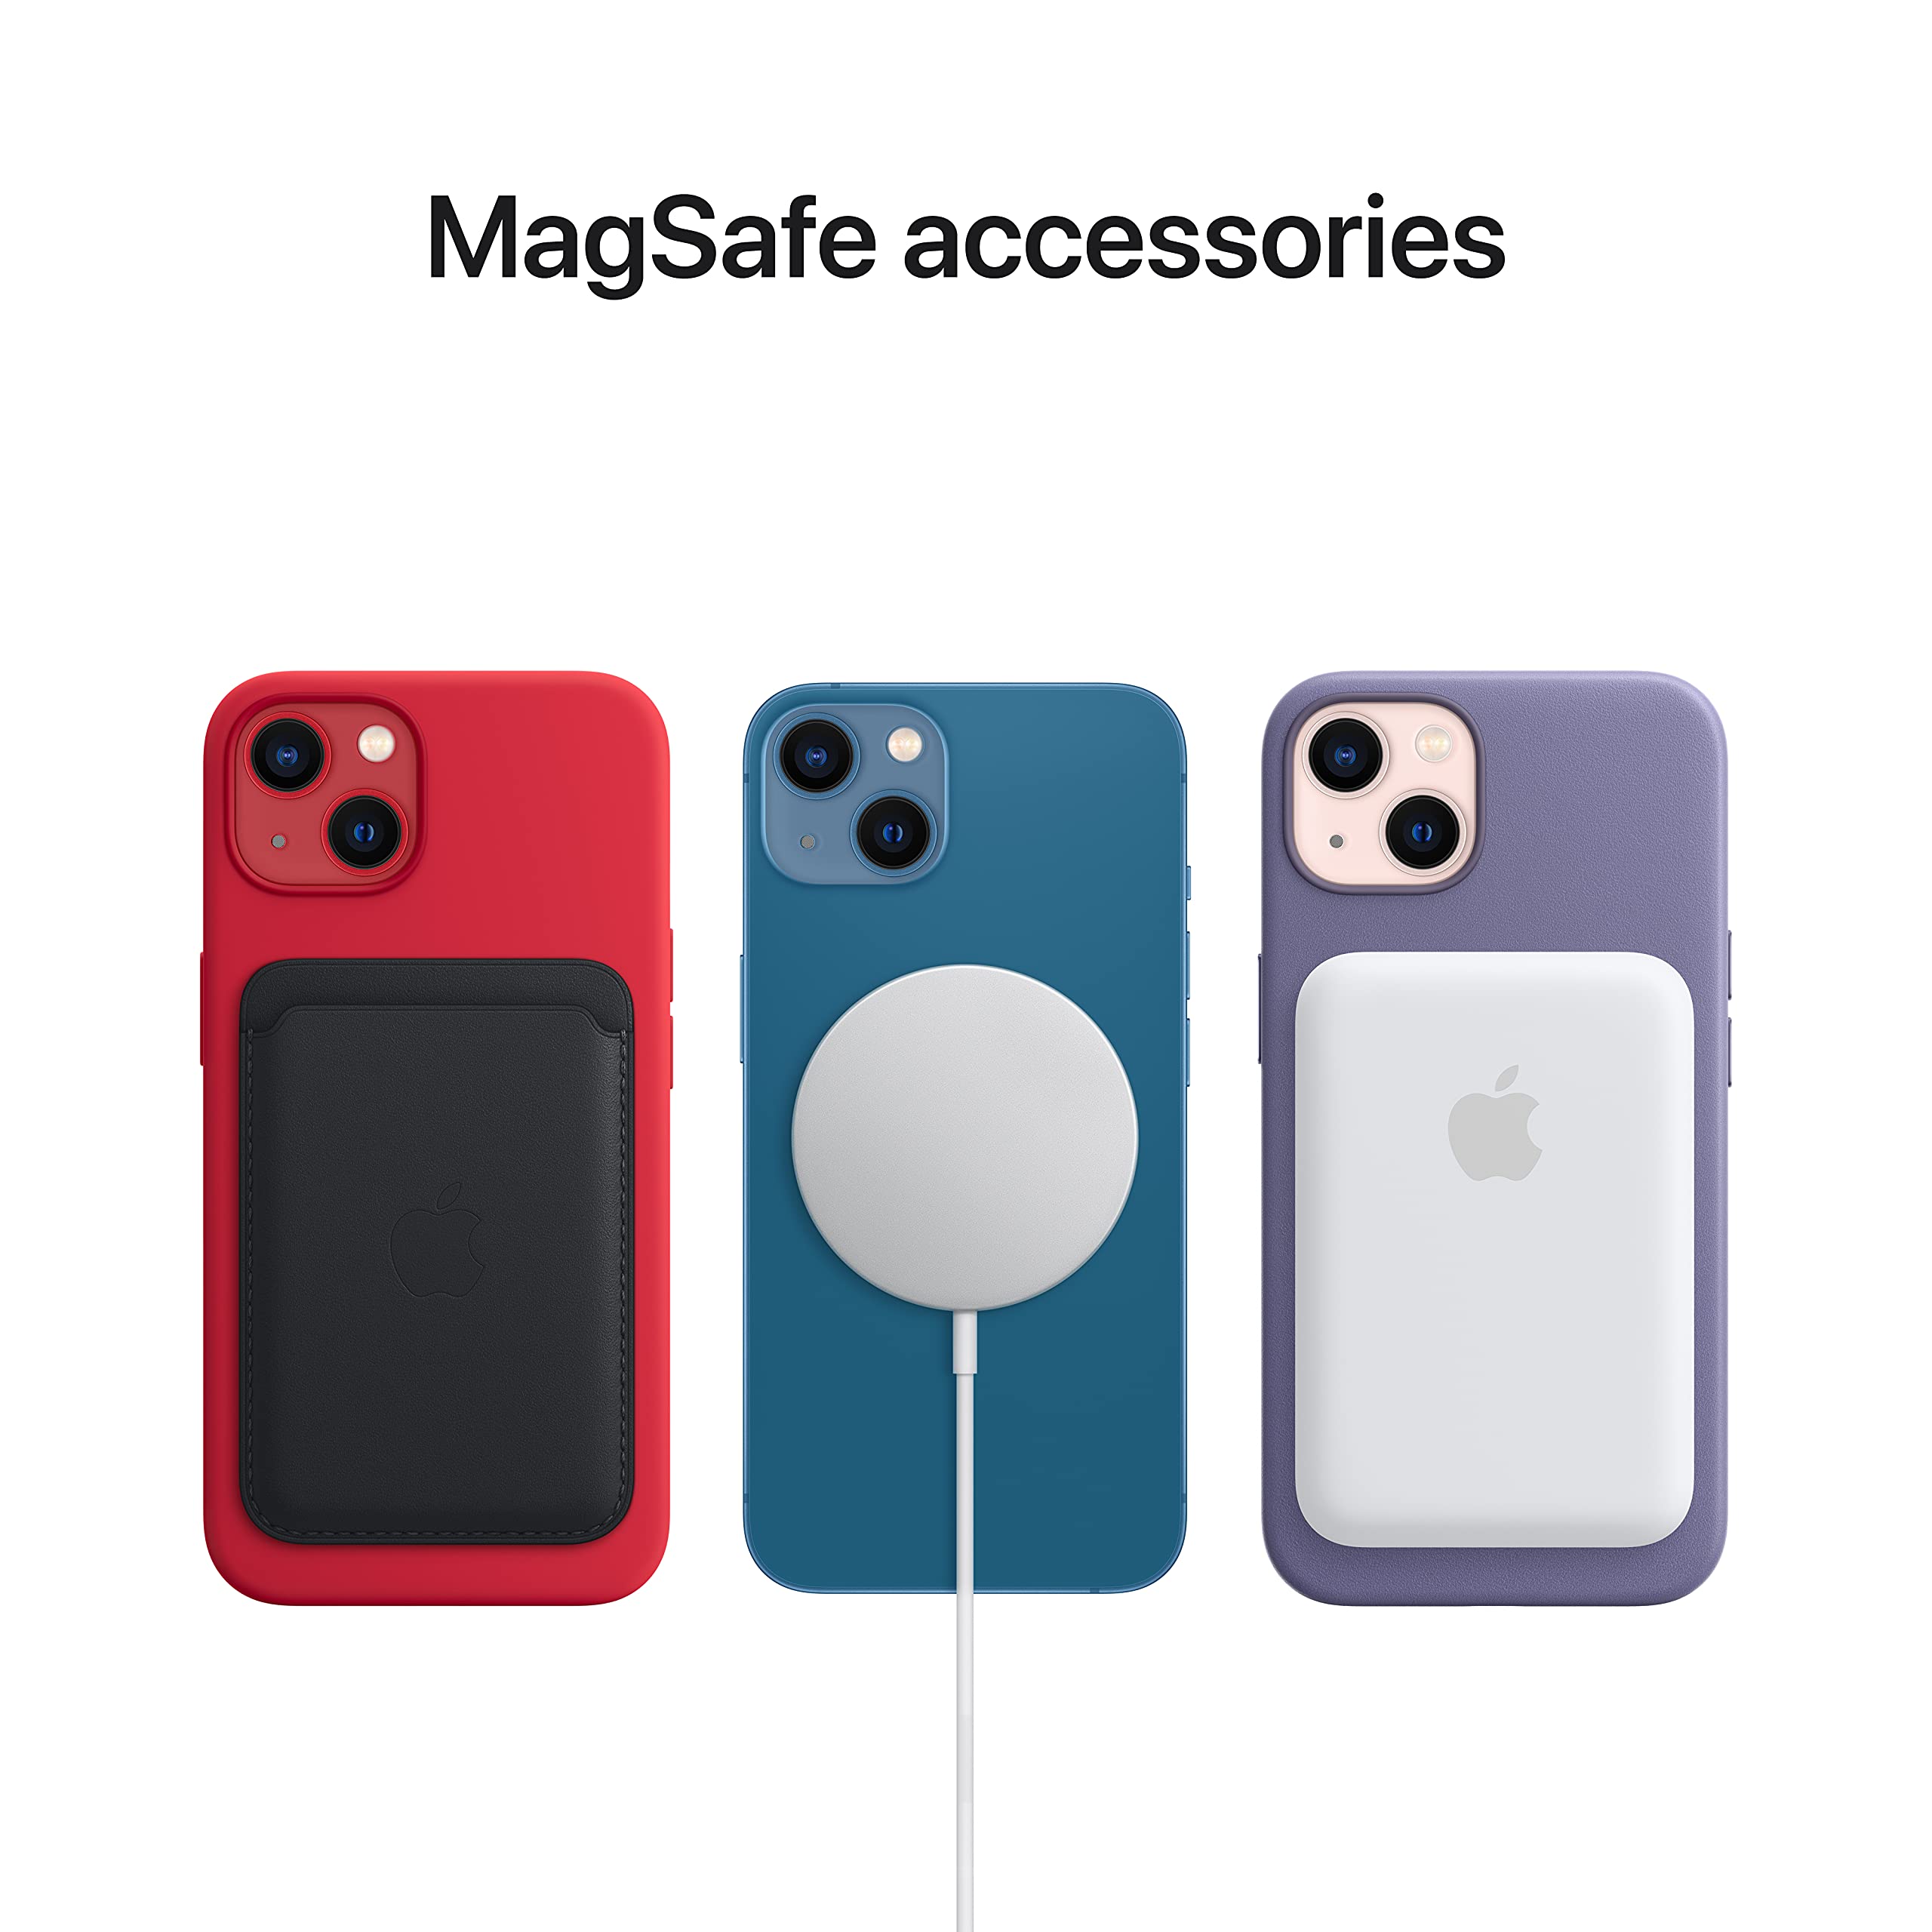 Mua Apple MagSafe蟇ｾ蠢� 繧ｷ繝ｪ繧ｳ繝ｼ繝ｳ繧ｱ繝ｼ繧ｹ (iPhone 13逕ｨ) 繧｢繝薙せ繝悶Ν繝ｼ trﾃｪn Amazon Nh蘯ｭt chﾃｭnh  hﾃ｣ng 2023 Giaonhan247